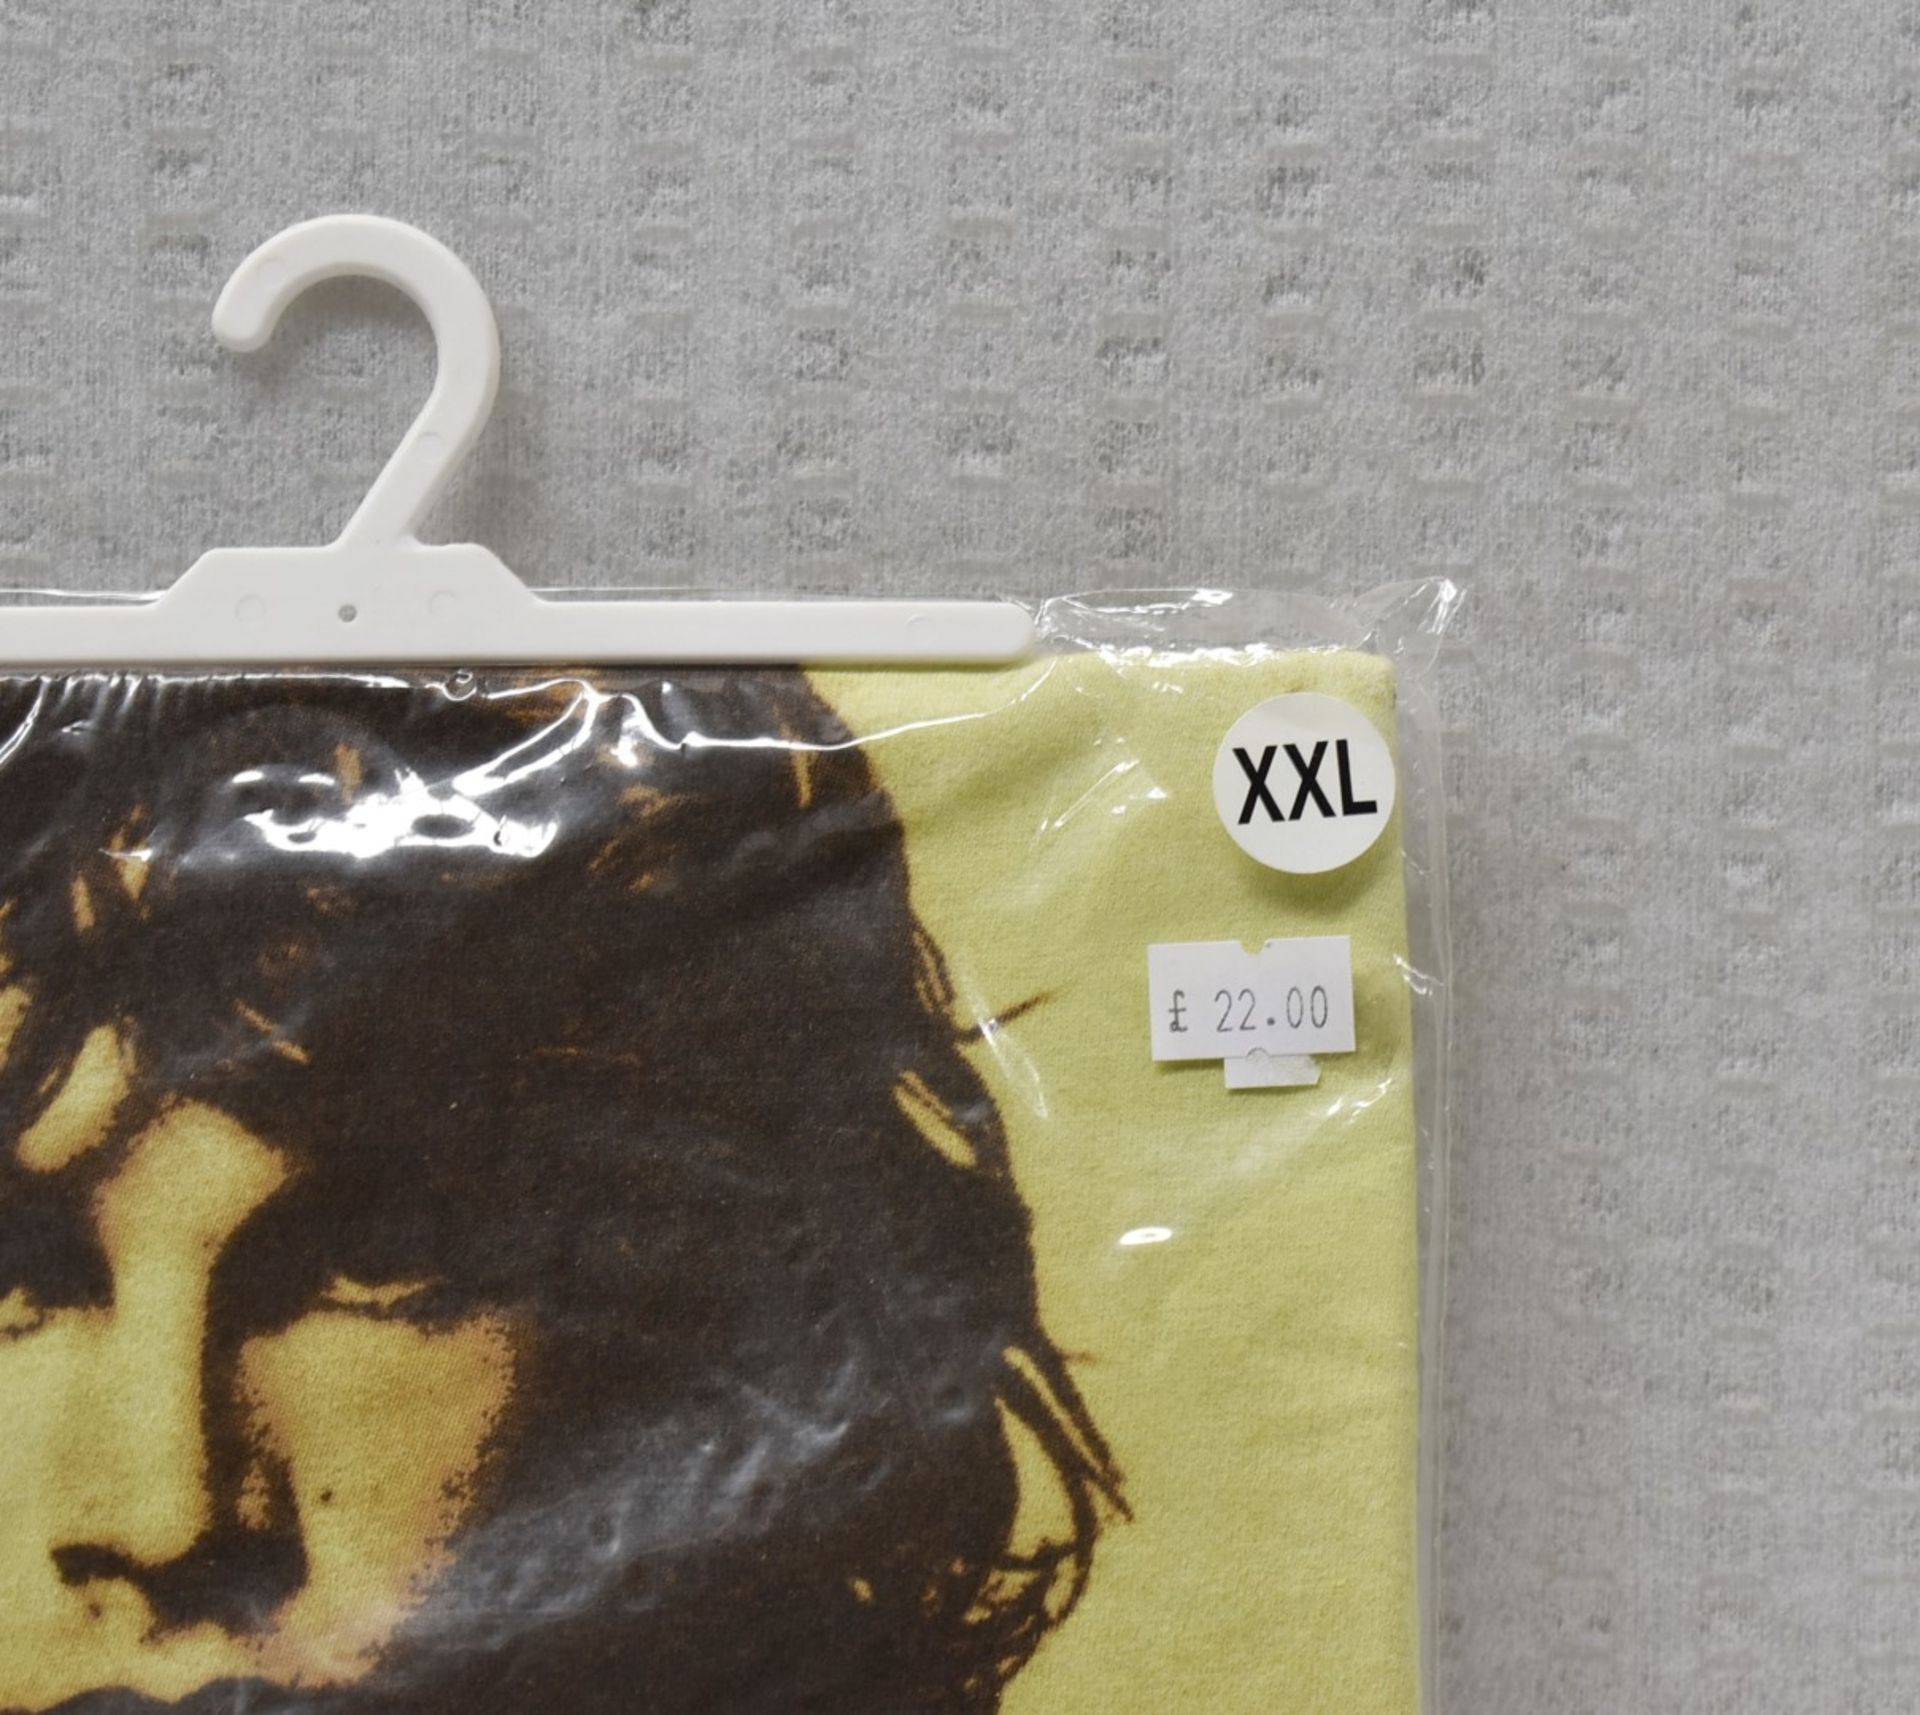 1 x THE DOORS Official Merchandise An American Poet Jim Morrison Logo T-Shirt - Size: XXL - Colour: - Image 3 of 6